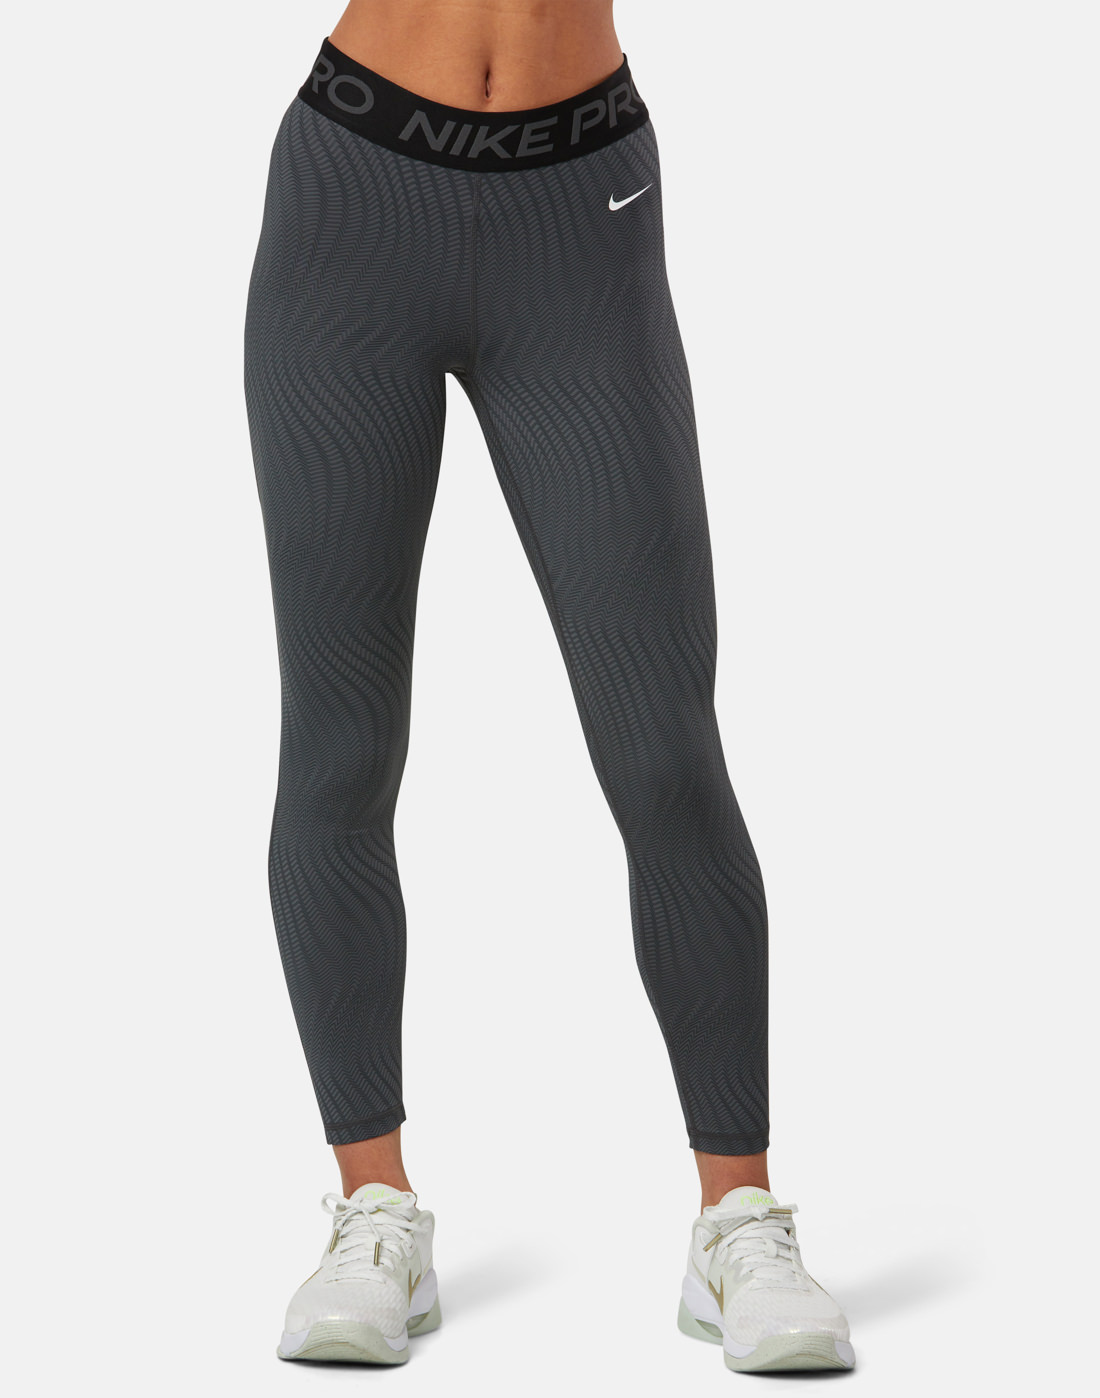 Nike Womens Pro 7/8 Leggings - Grey | Life Style Sports IE